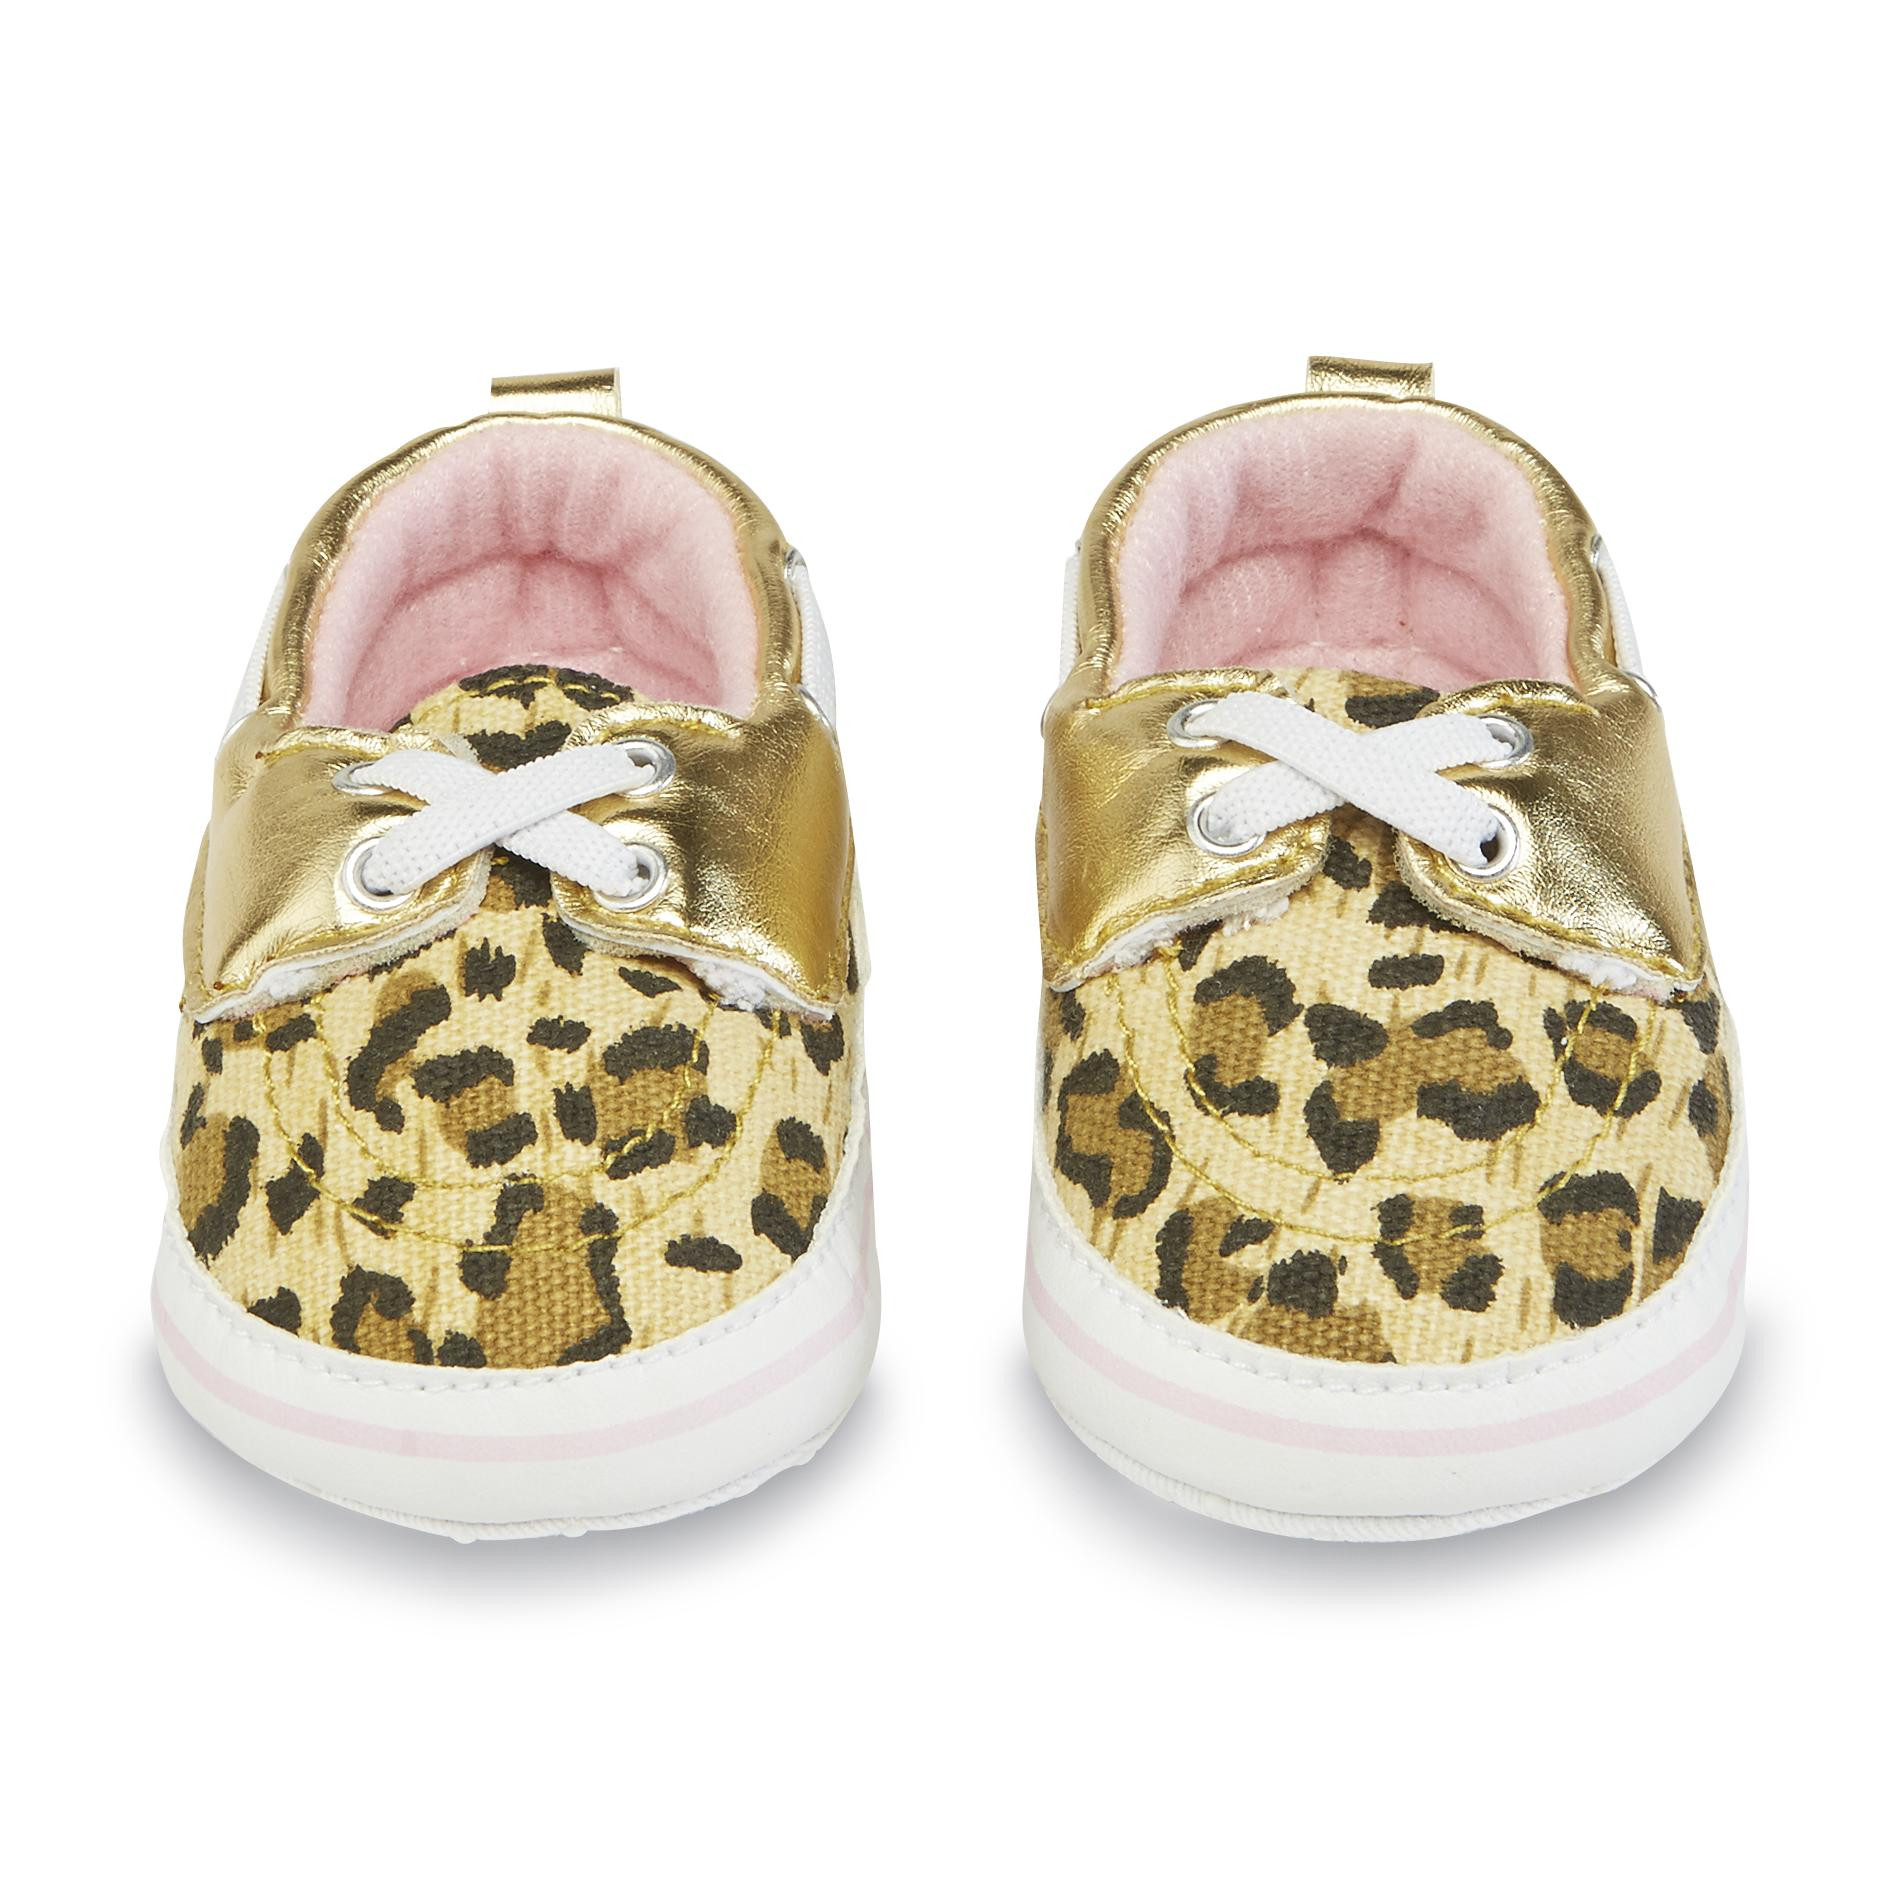 Baby Fashion Shoes
 Newborn & Infant Girl s Leopard Print Shoe